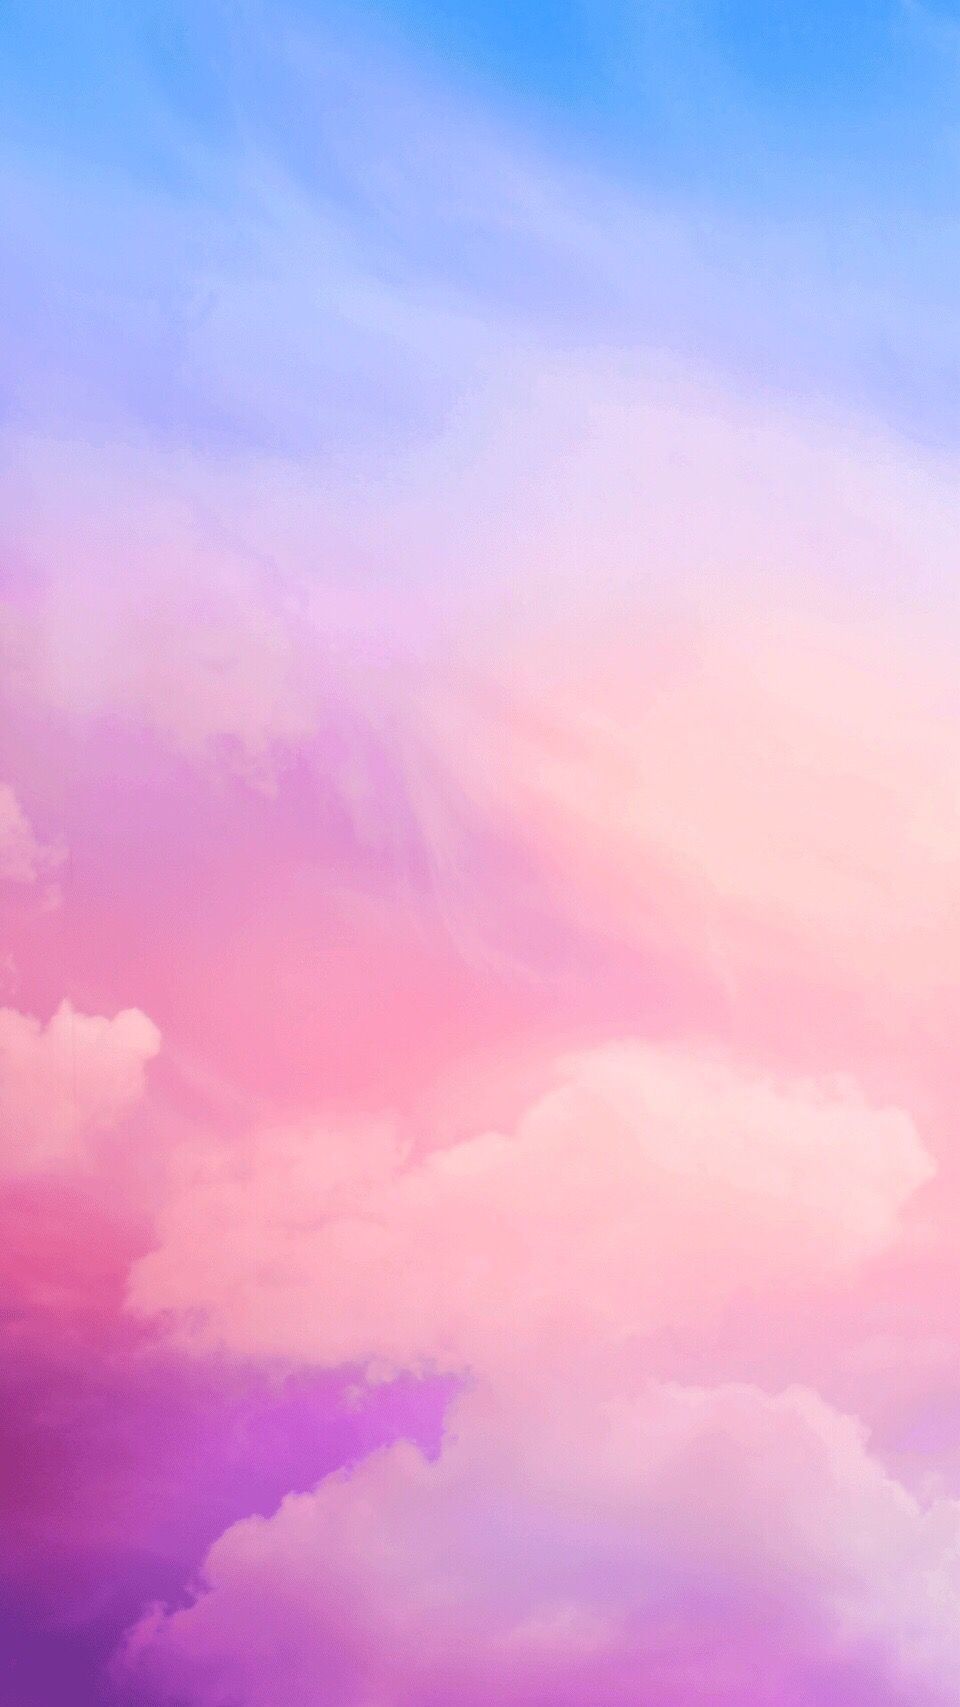 Pink clouds iPhone wallpaper. Dekorasi minimalis, Seni